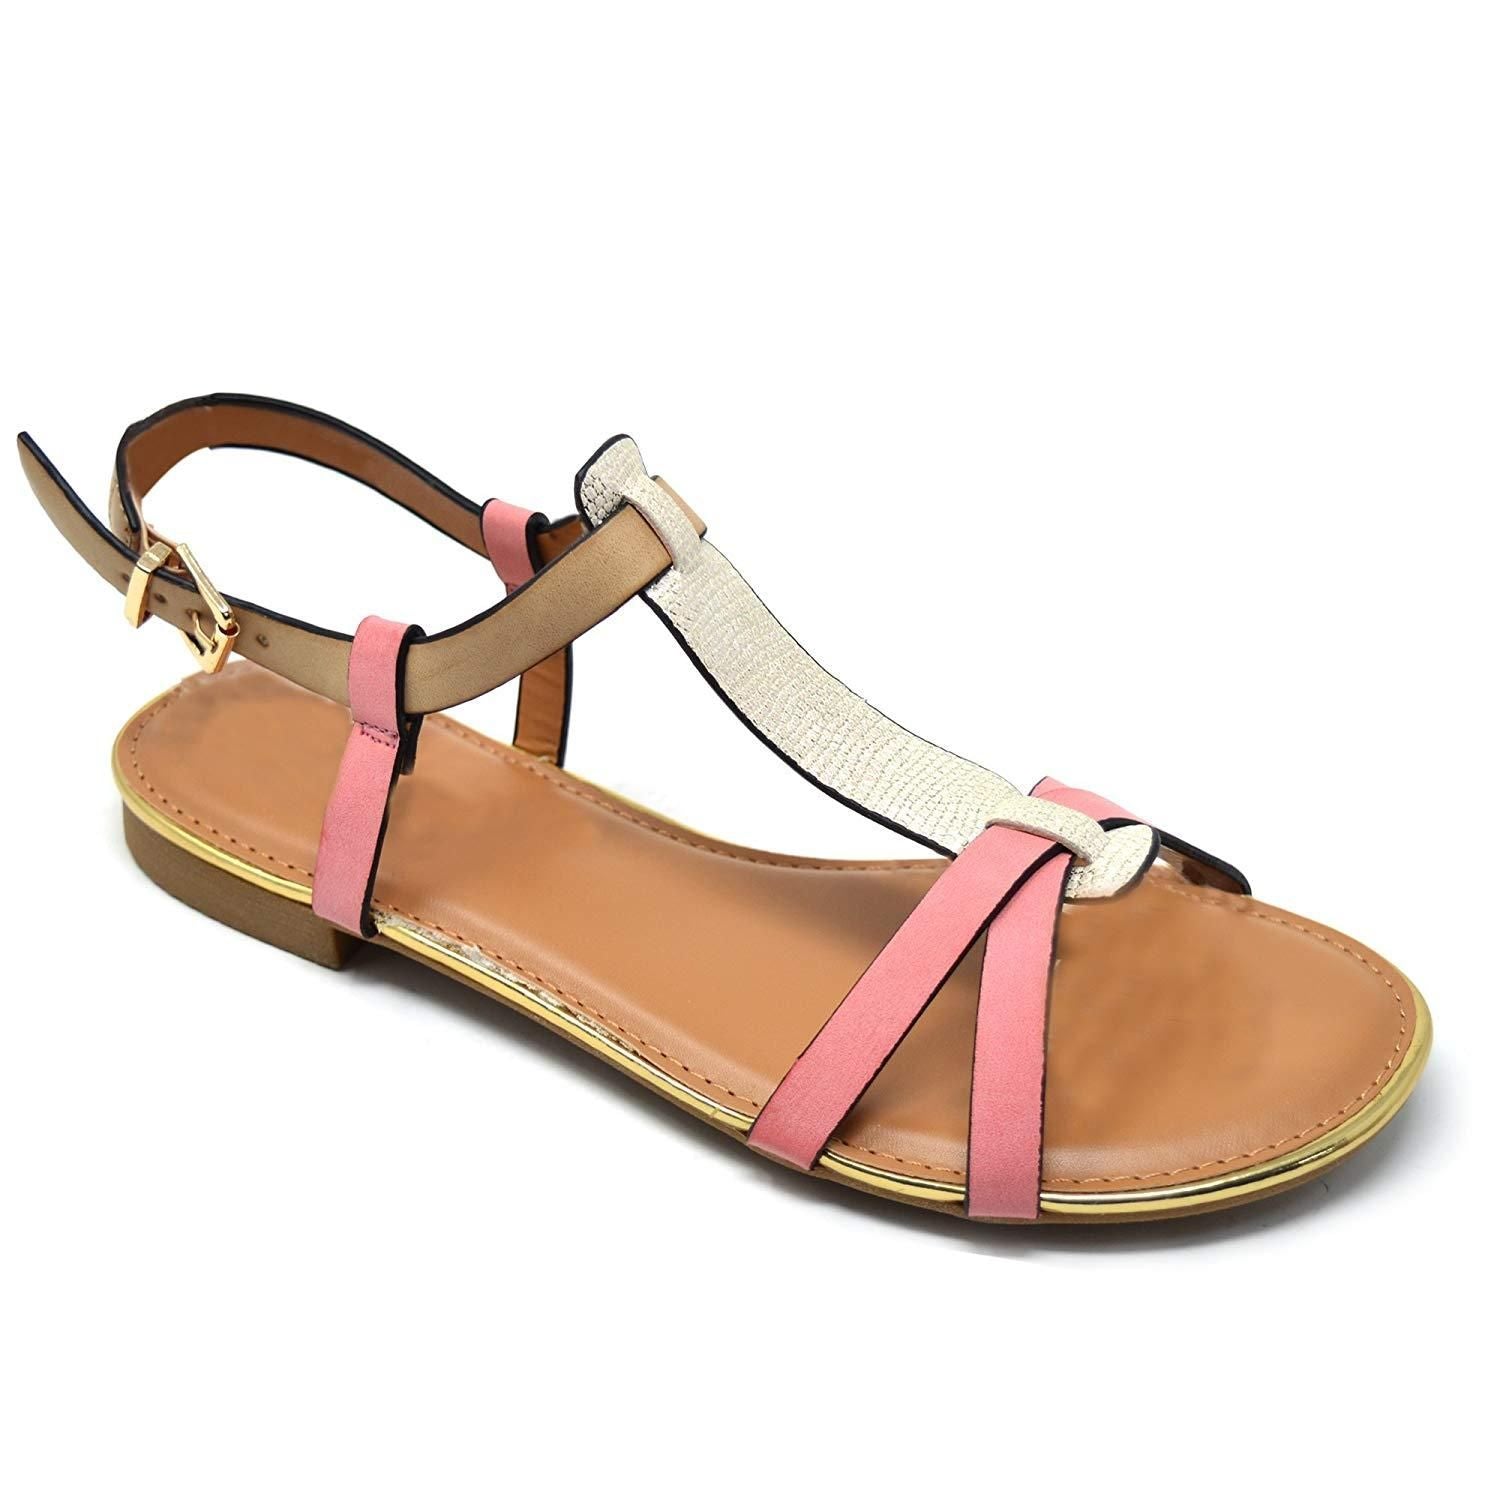 Womens Sandals and Beach Shoes - Xelay